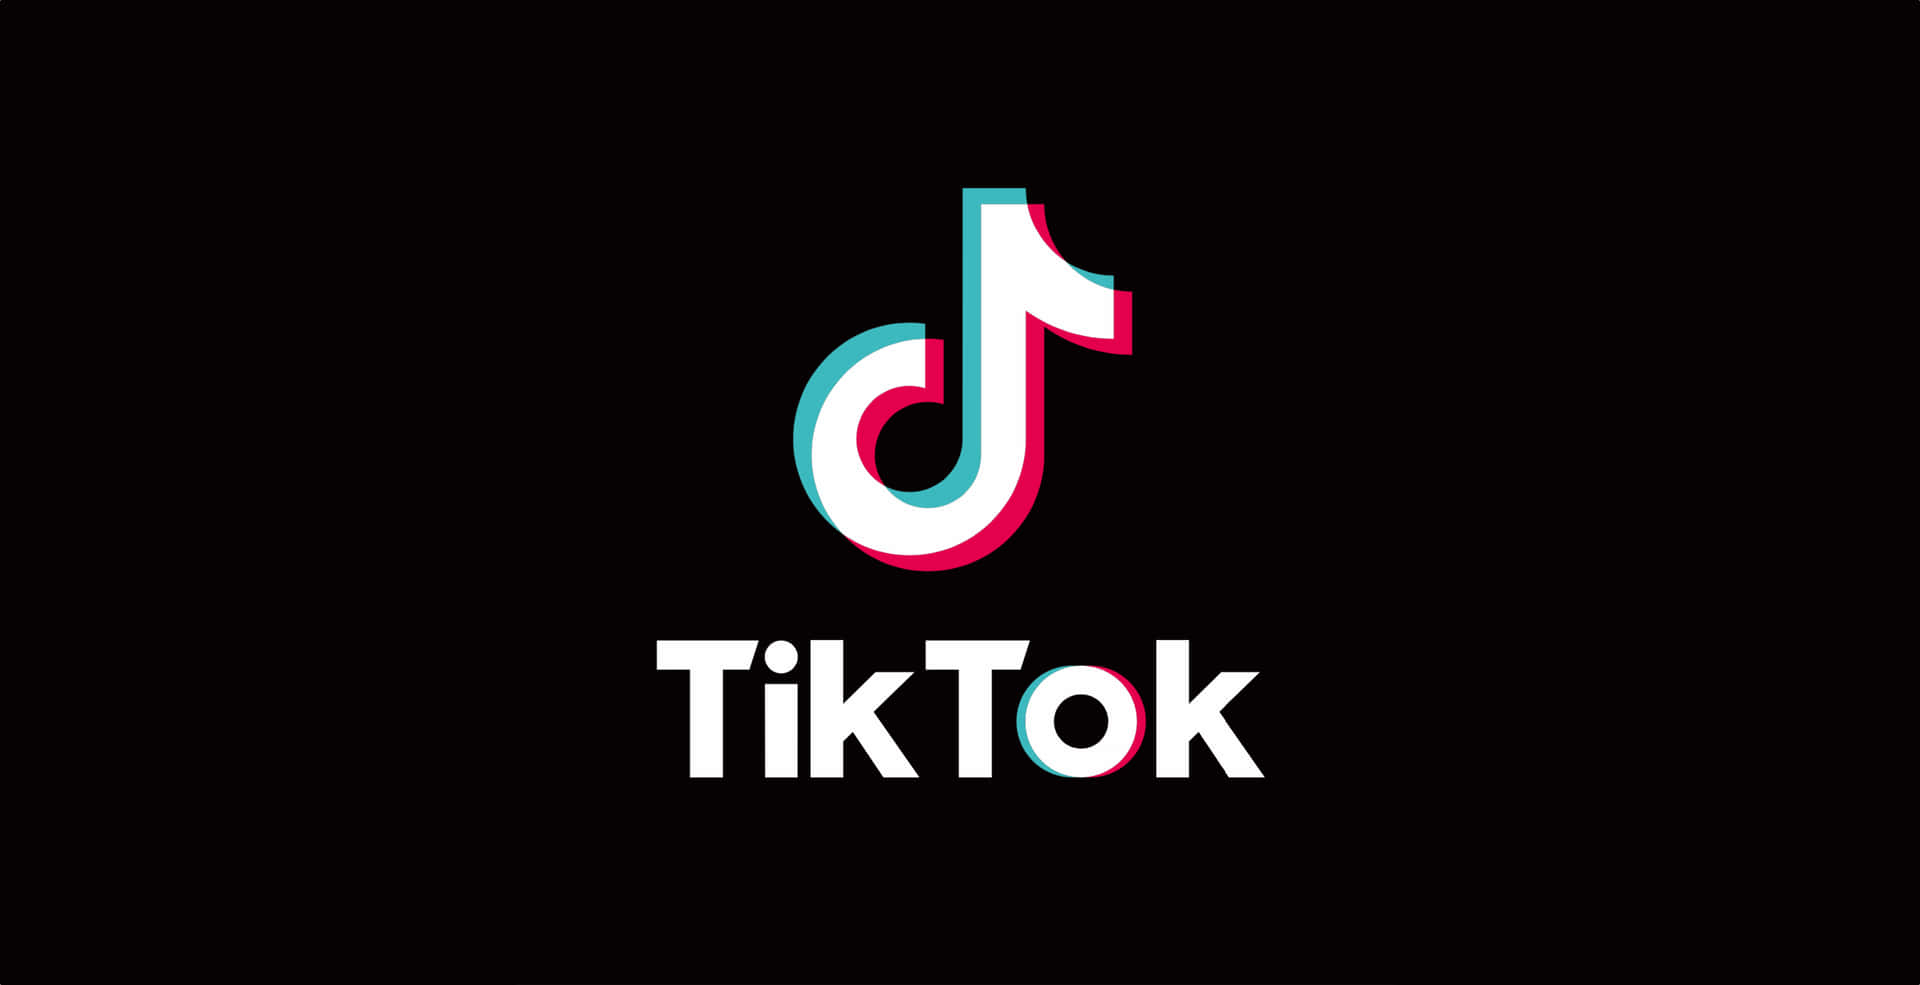 tiktok logo on a black background